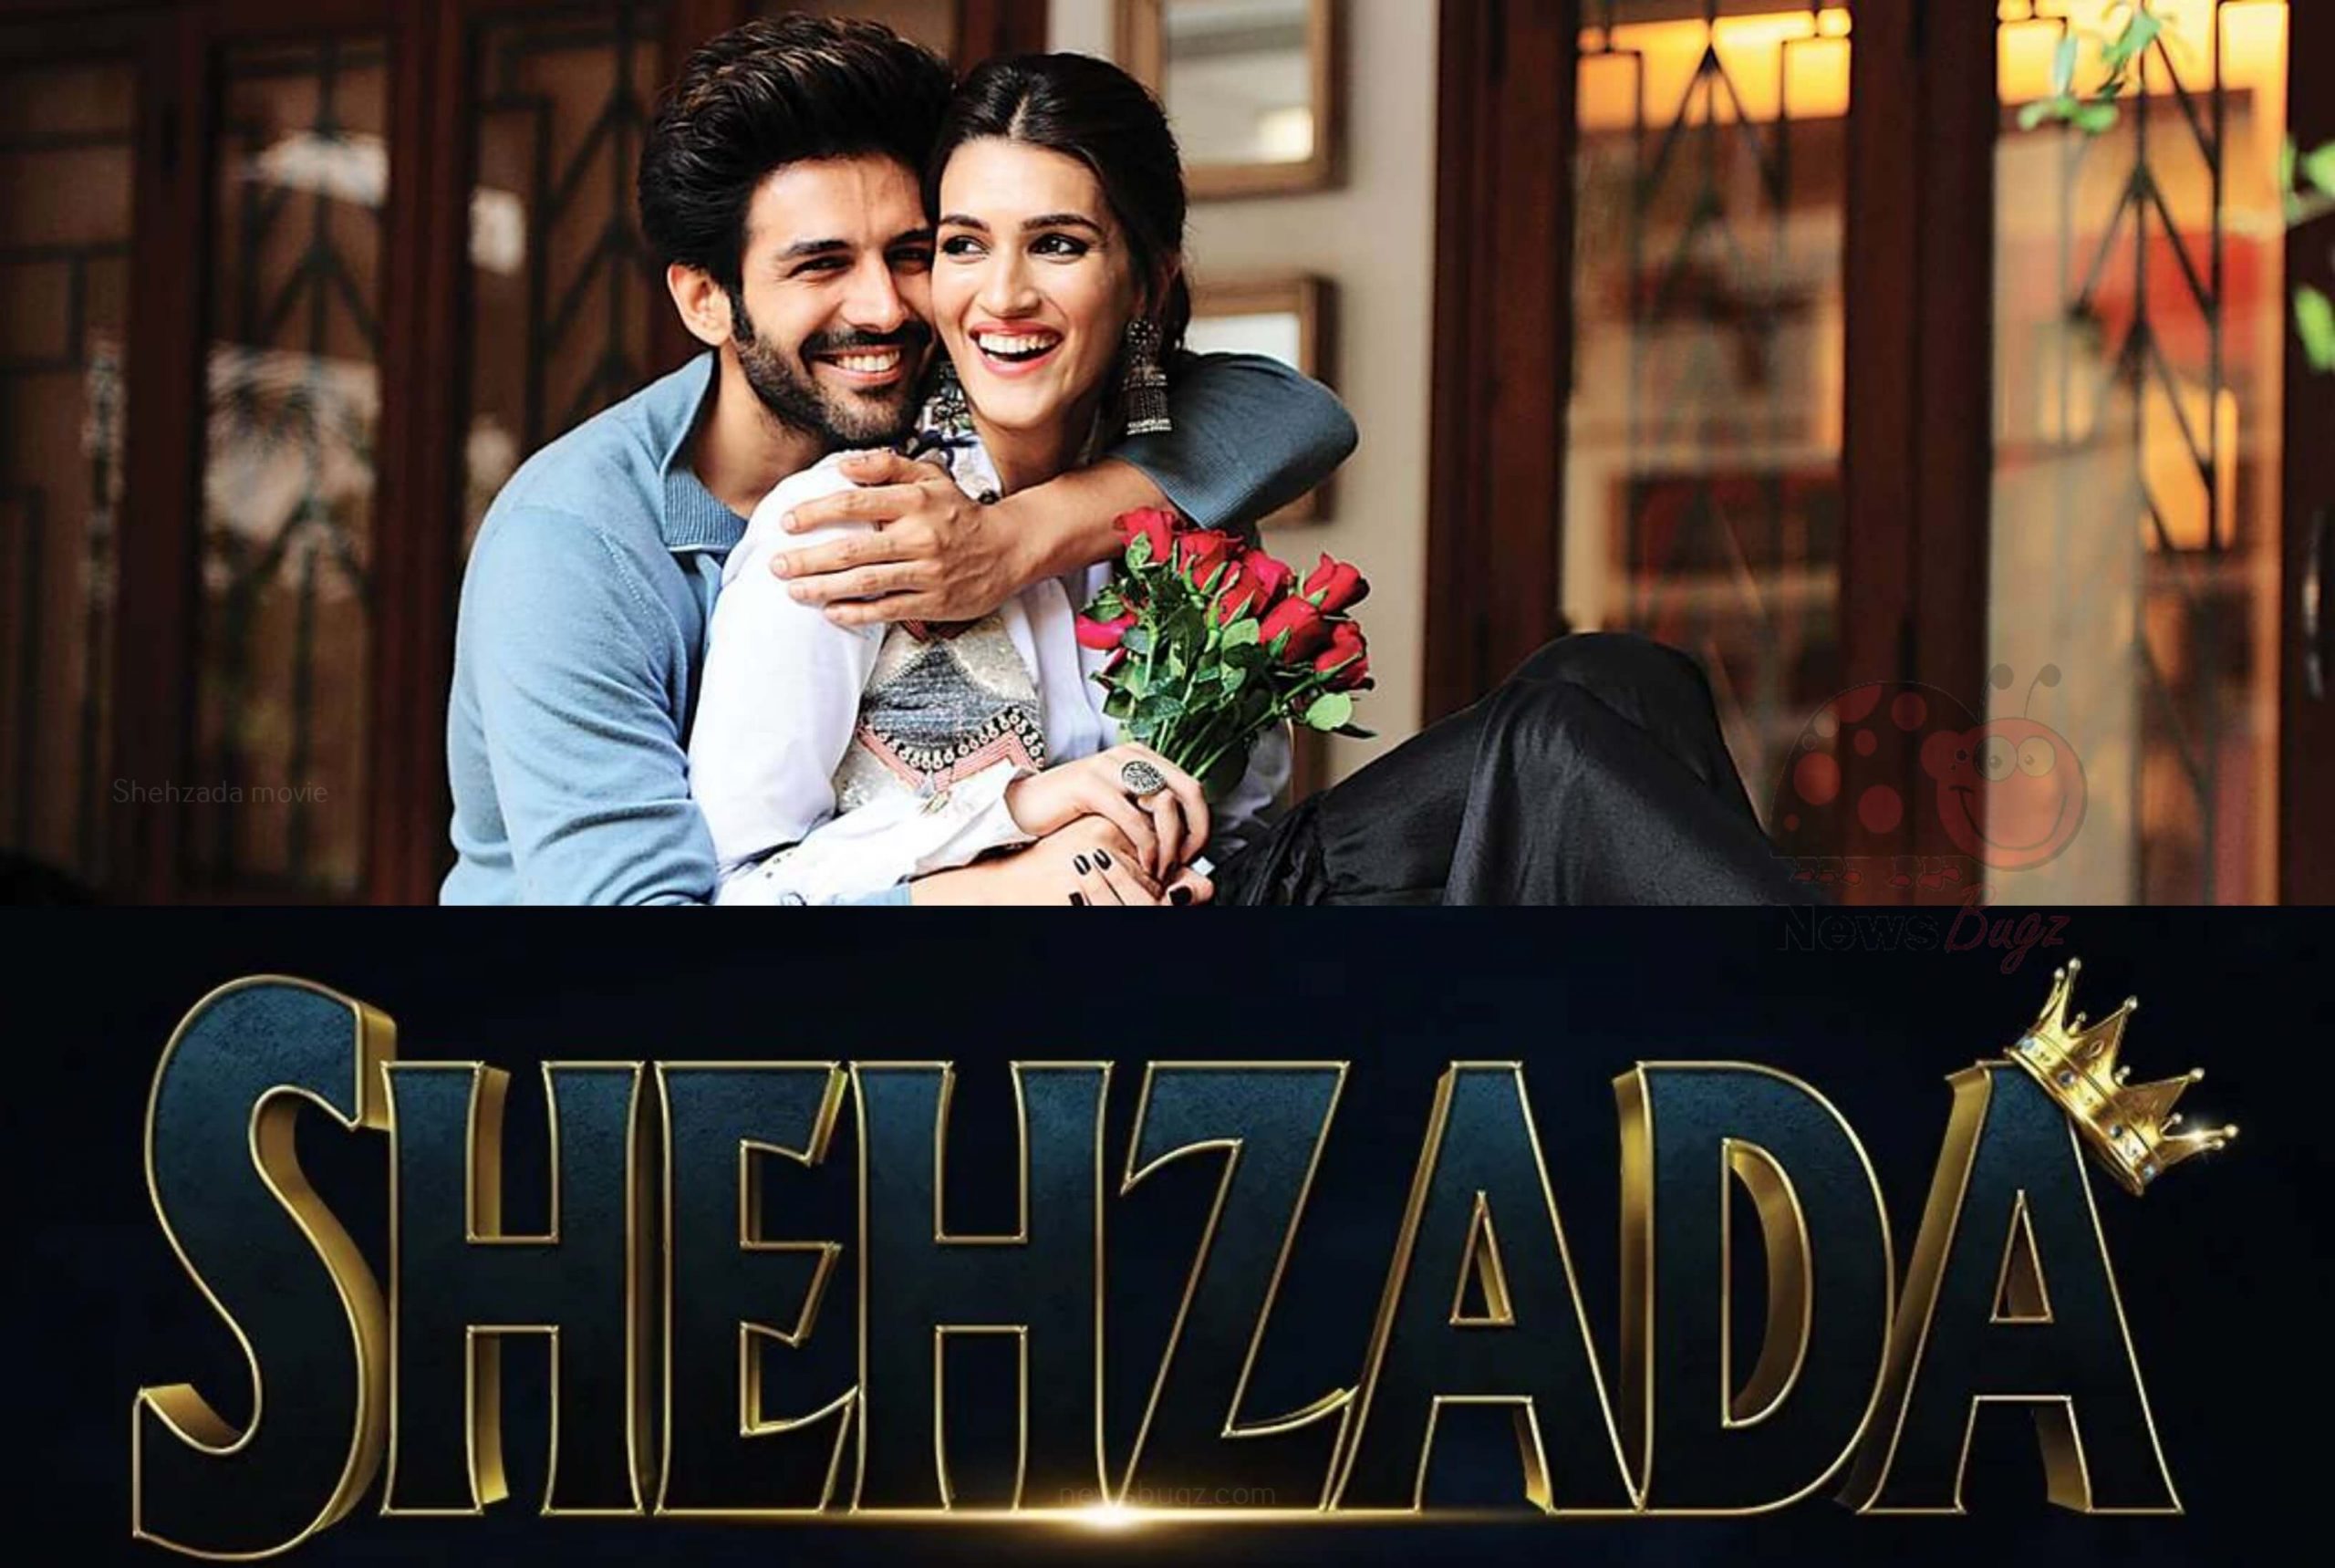 Movie Shehzada की शूटिंग शुरू, अगले साल 4 नवंबर को रिलीज होगी